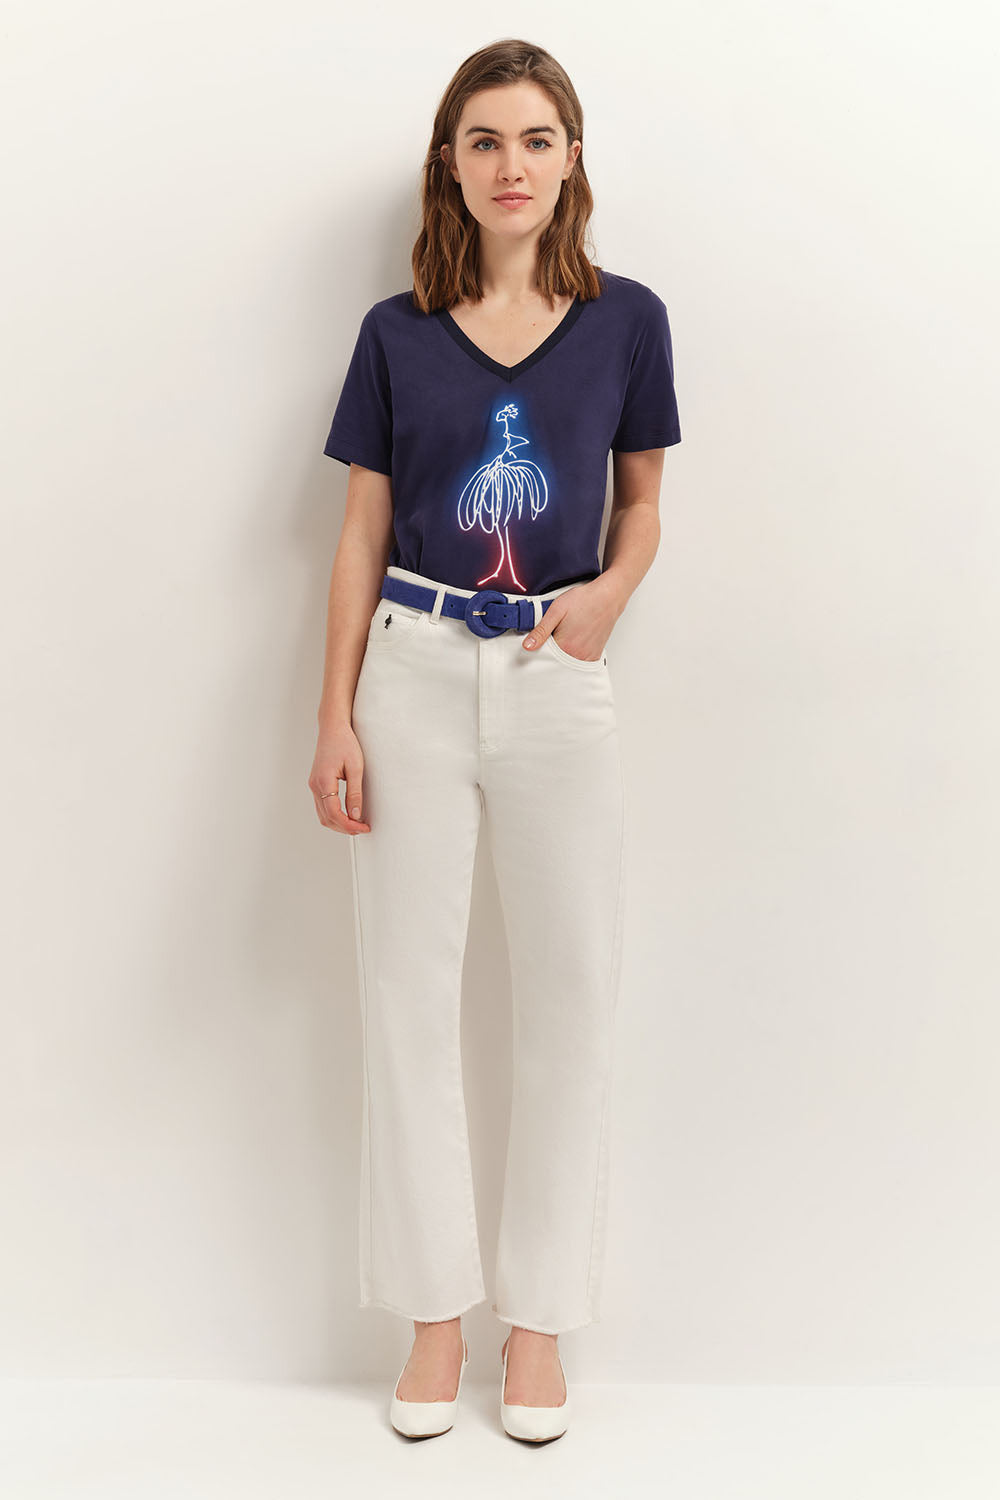 MADIAN - T-shirt estate blue coton bio visuel danseuse futuriste